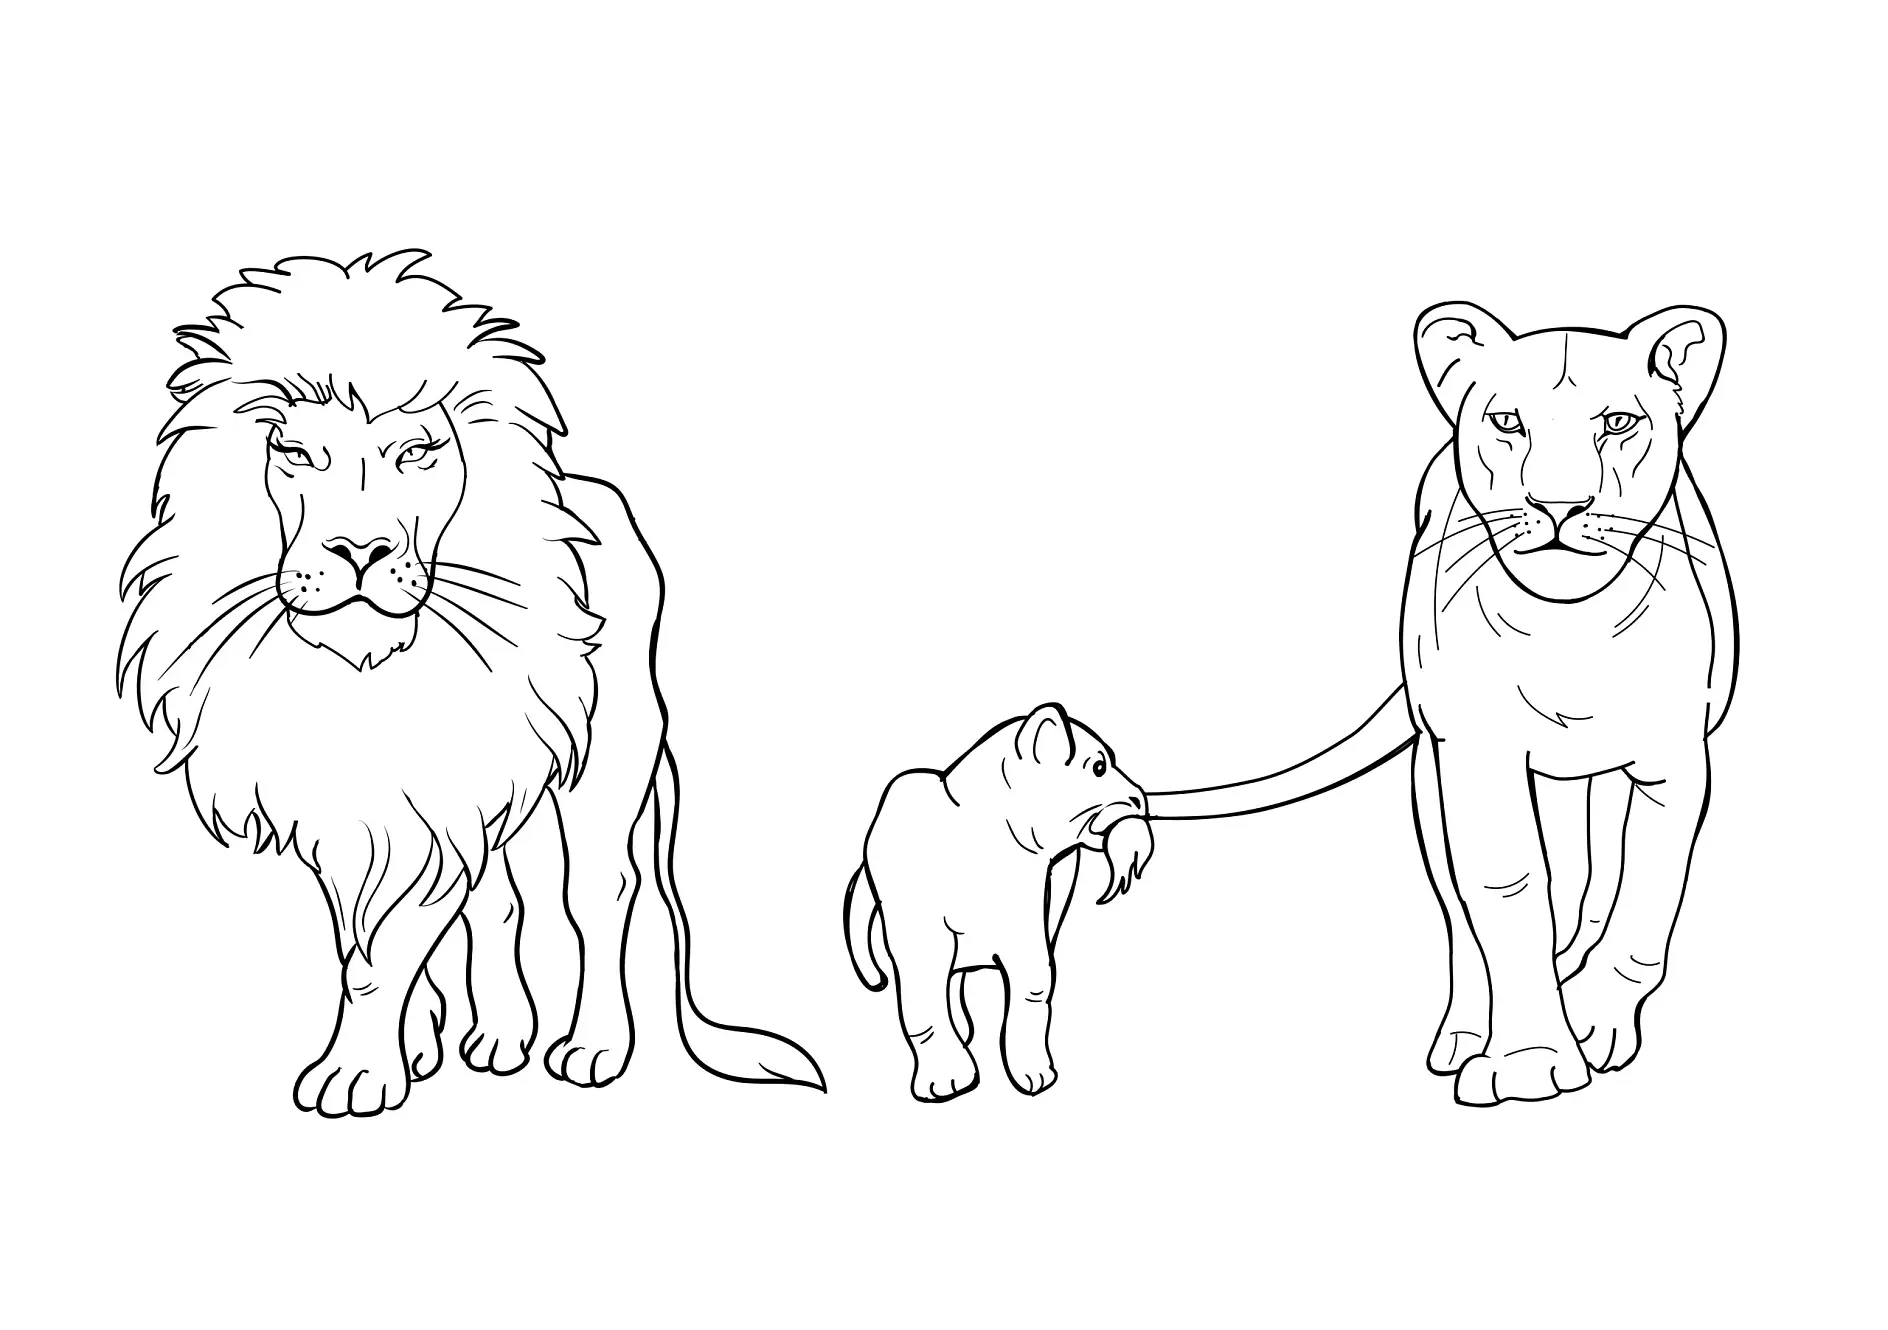 Ausmalbild Löwenfamilie spaziert gemeinsamA family of lions. Lion Coloring Pages